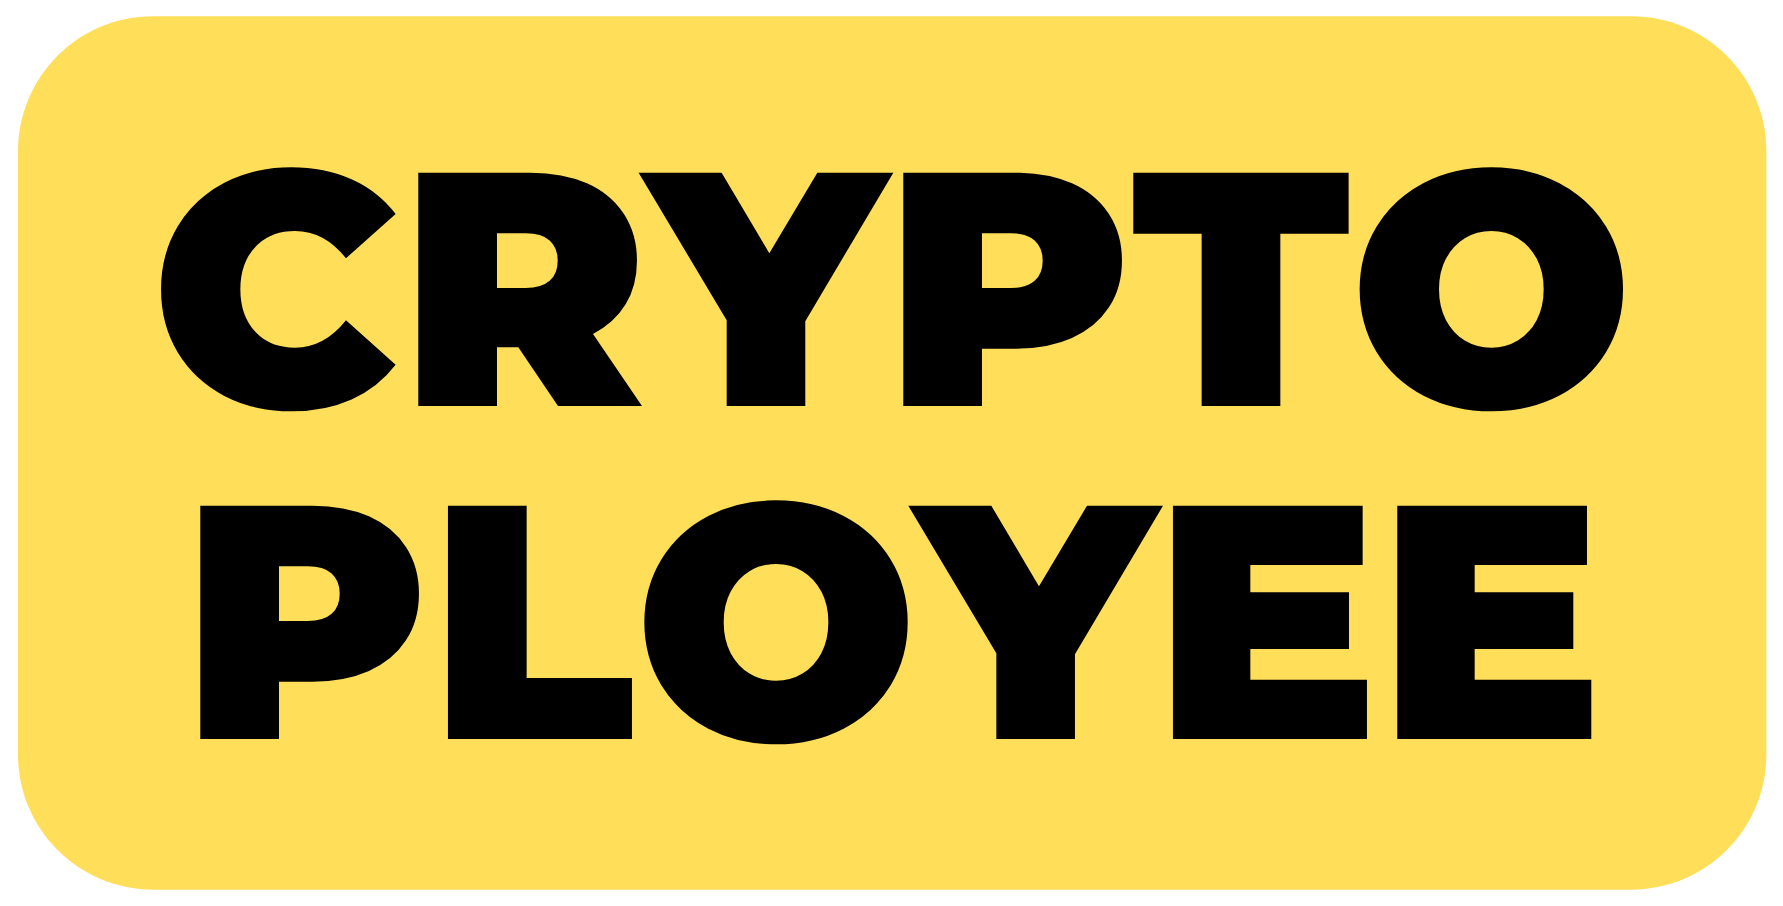 Cryptoployee